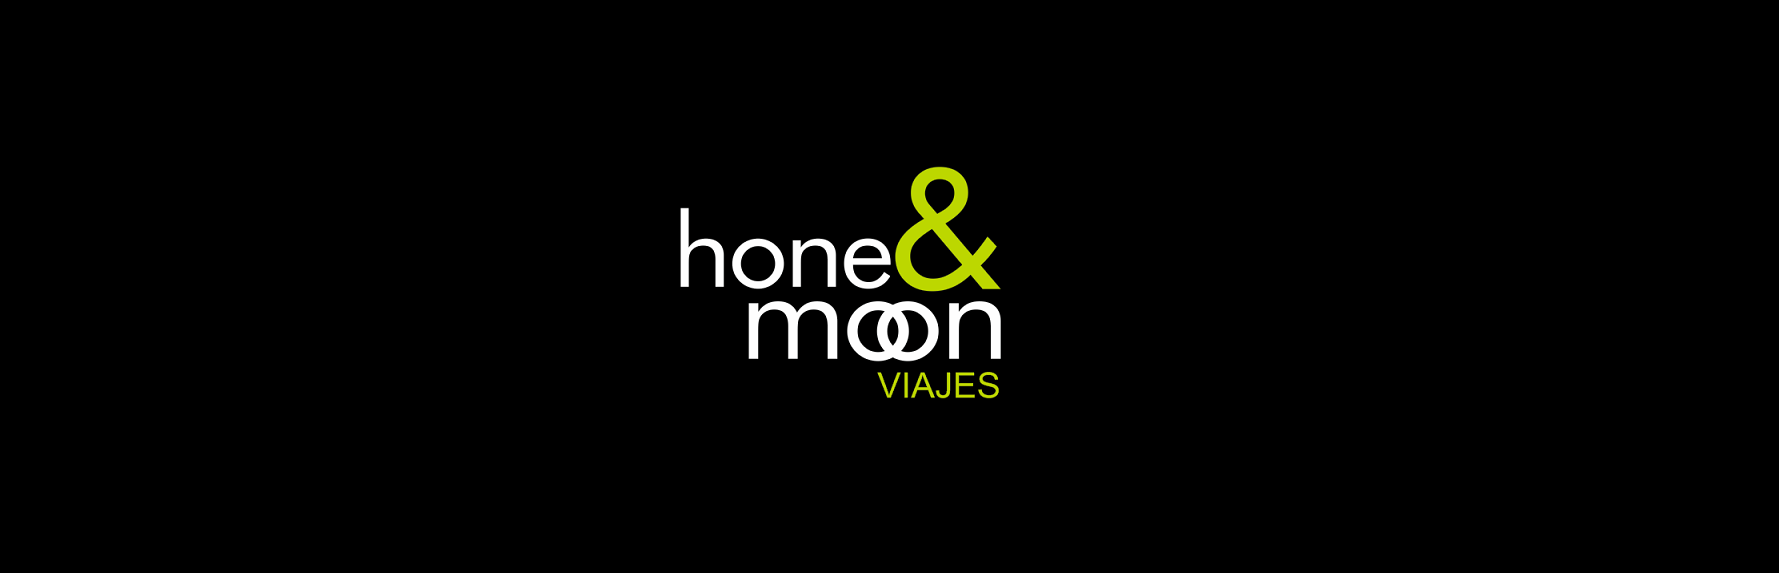 Hone&Moon Viajes